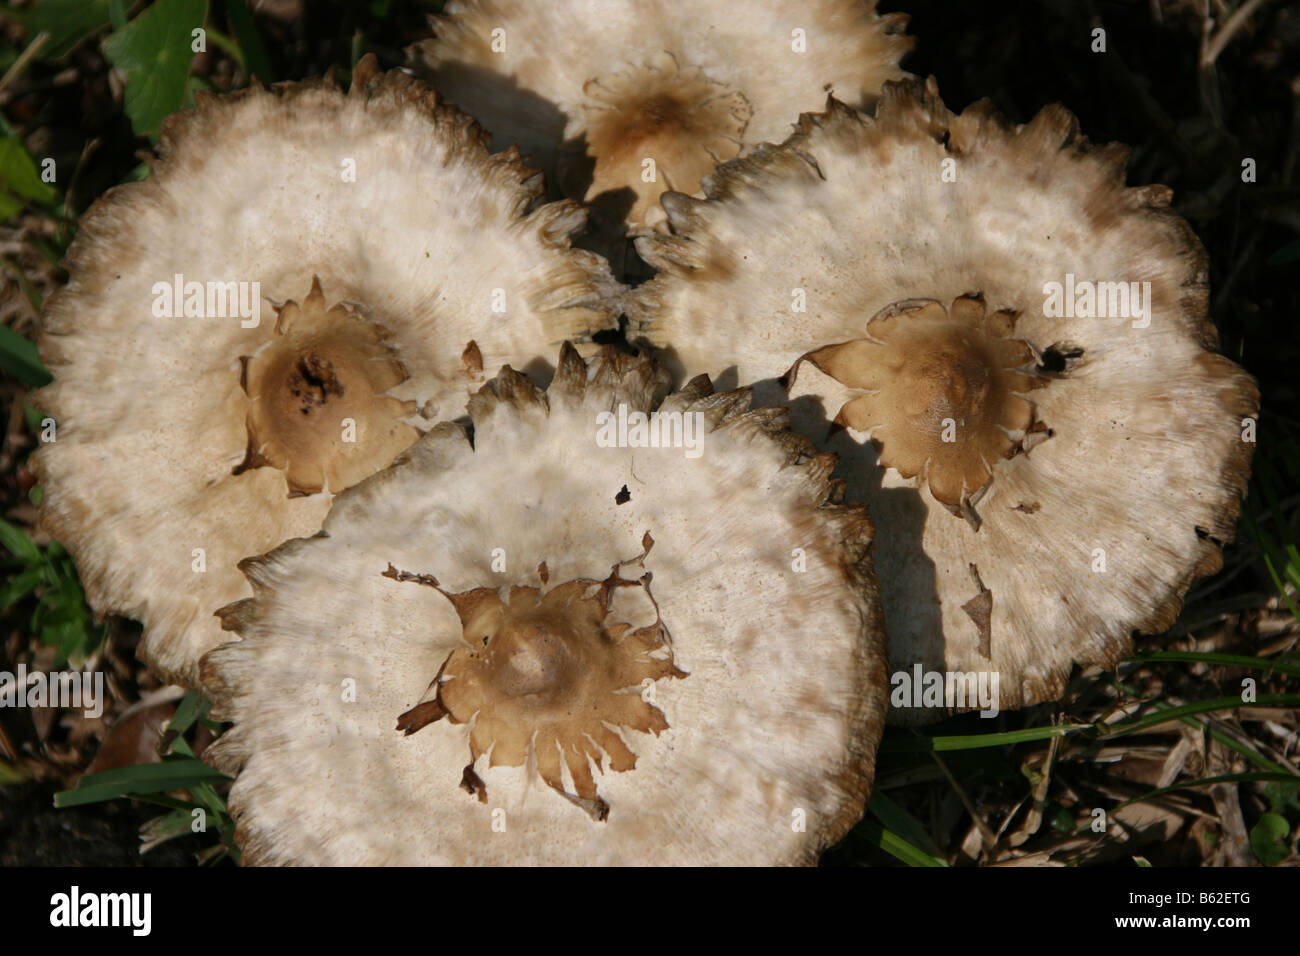 cluster of 4 circular mushrooms growing wild Stock Photo